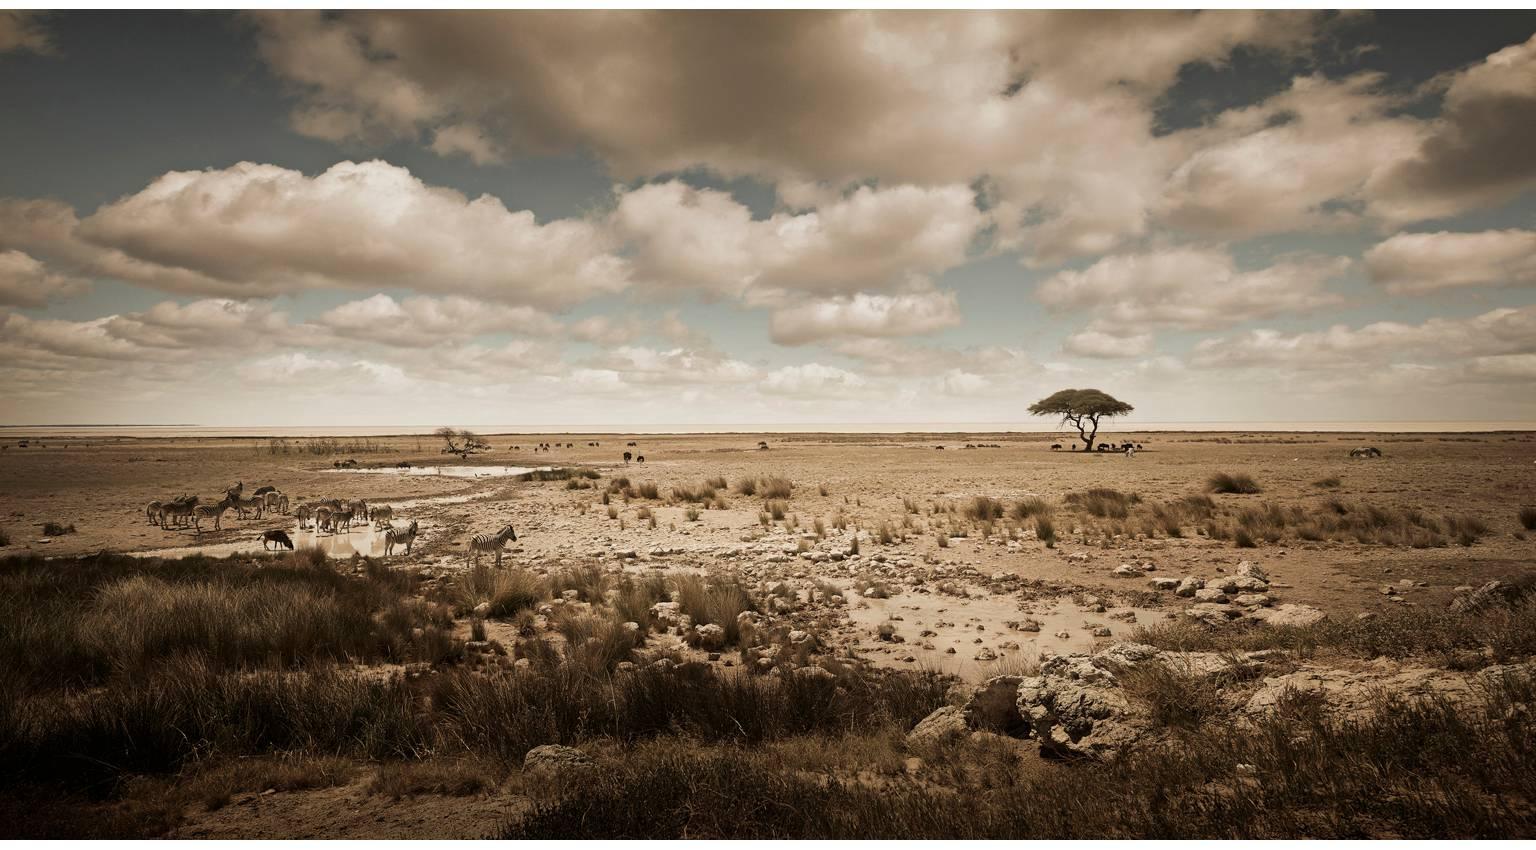 Chris Gordaneer Color Photograph - Etosha, Namibia